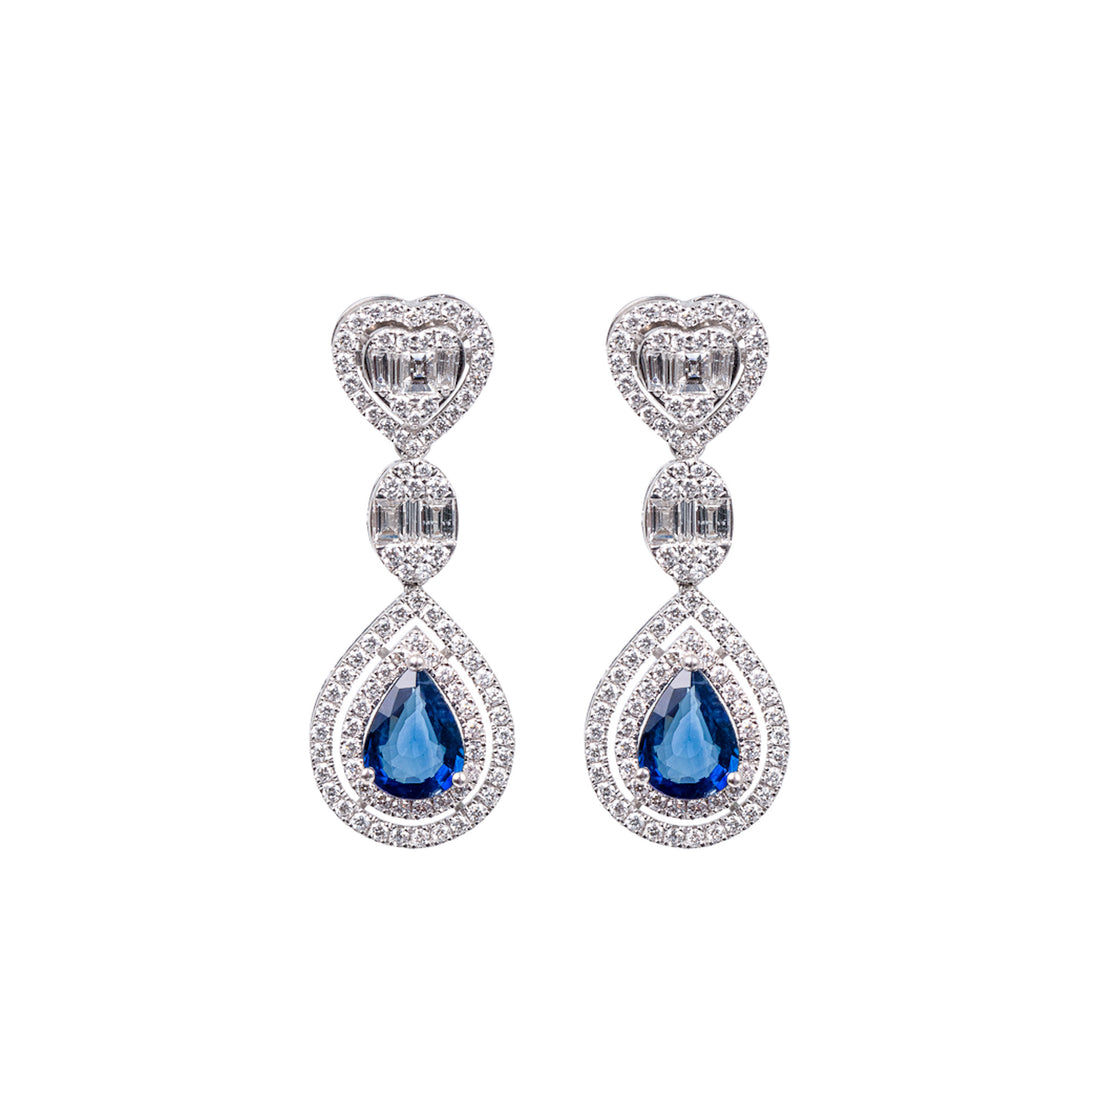 Maison de Joie 18kt White Gold Diamond & Sapphire Drop Style Earrings